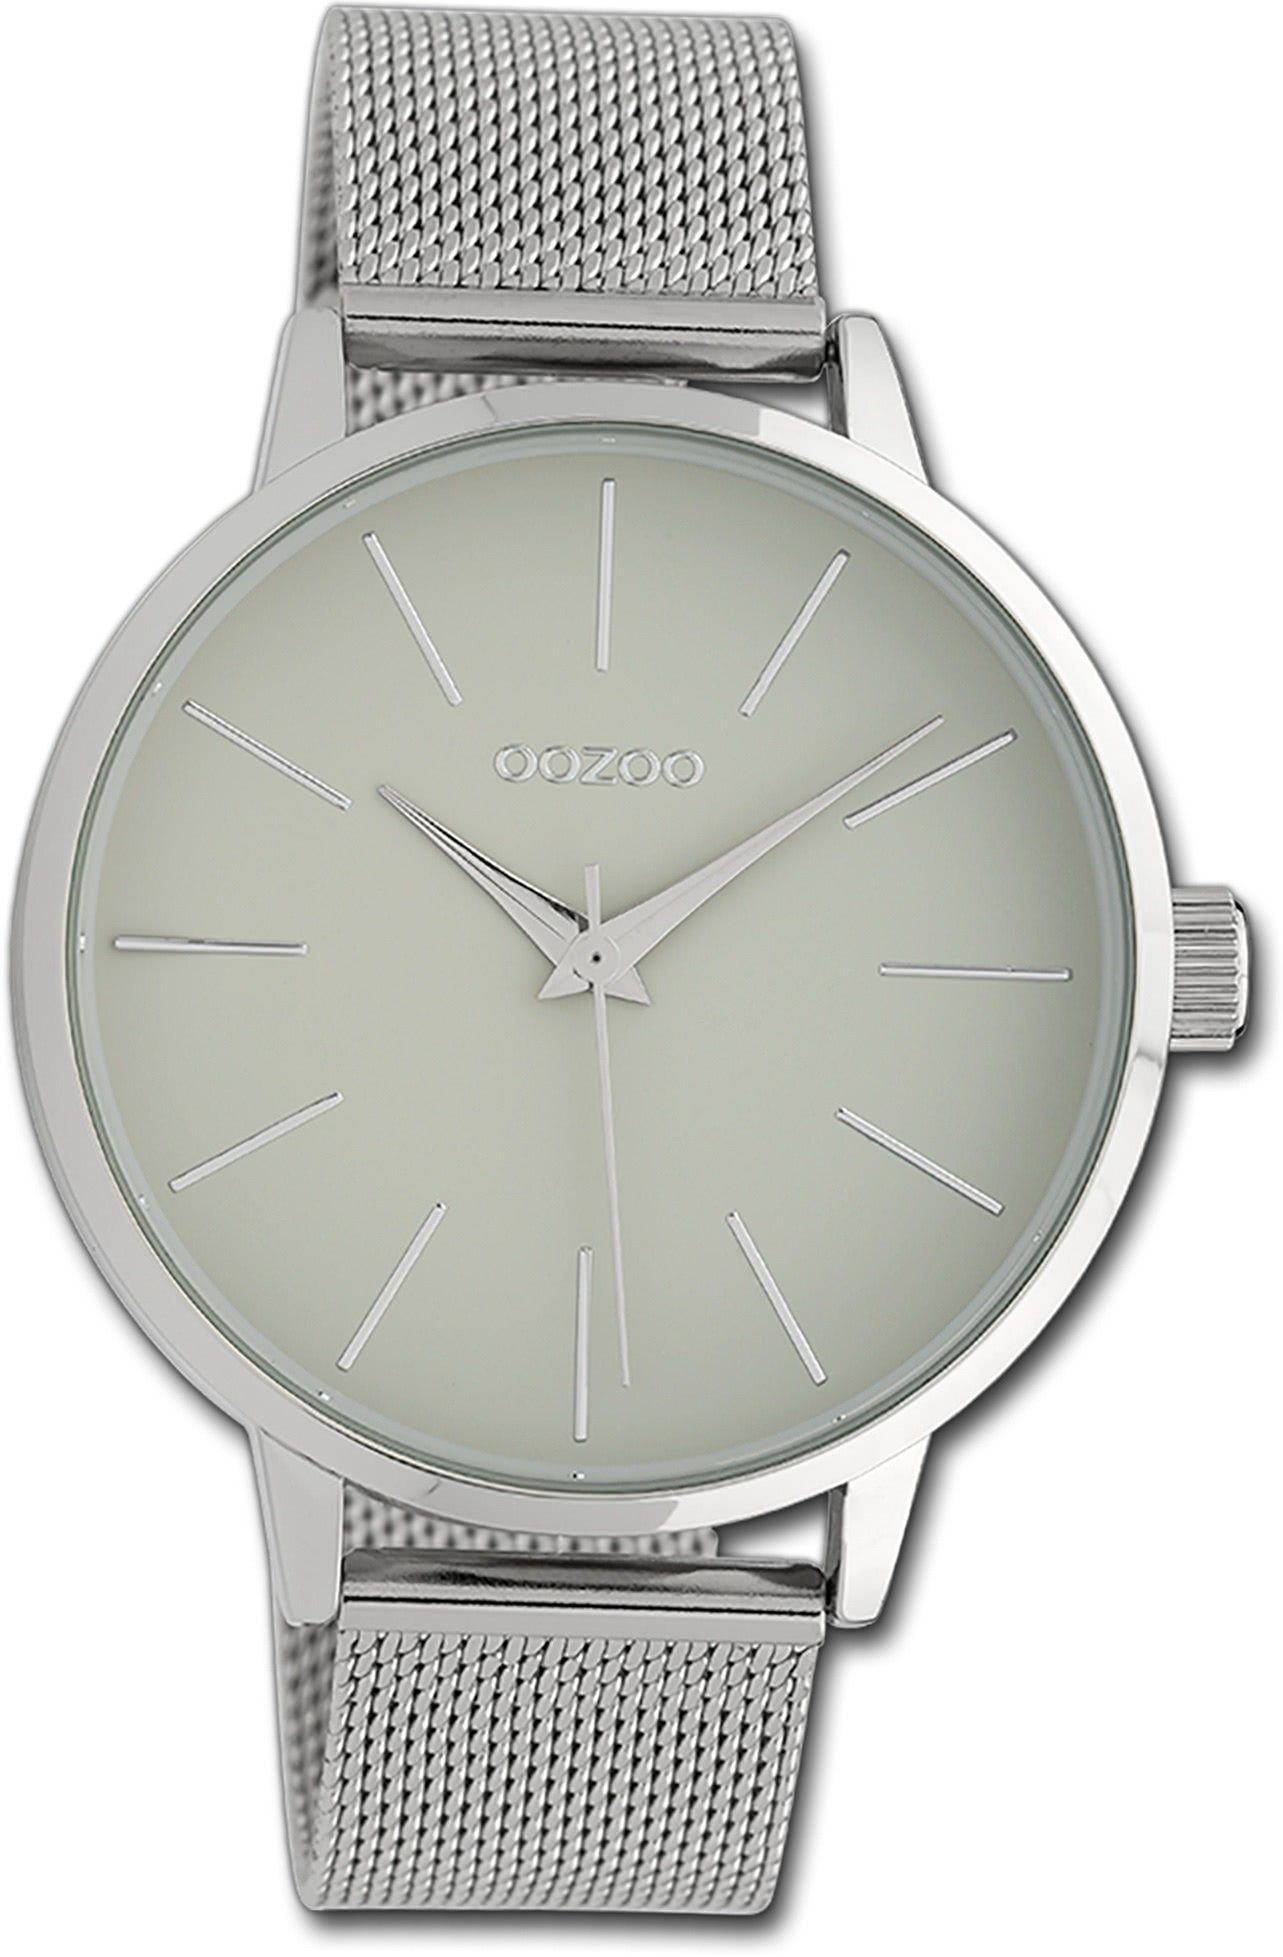 groß Armbanduhr silber, Oozoo rundes 45mm) Damenuhr Timepieces, Damen Quarzuhr OOZOO (ca. Metallarmband Gehäuse,